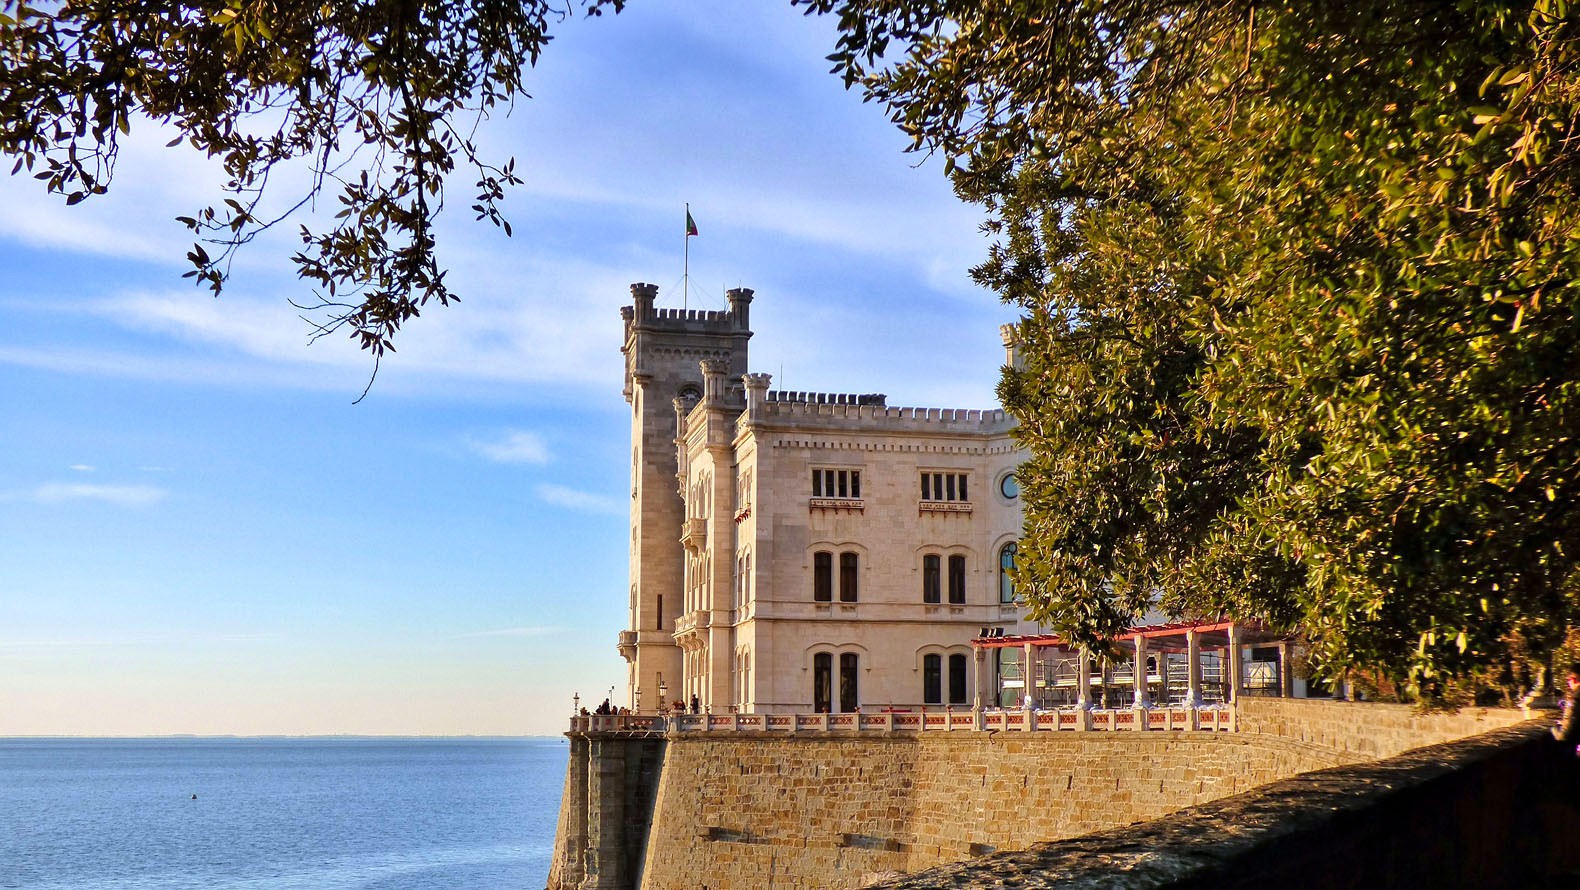 Cosa fare a Trieste in un weekend? Image